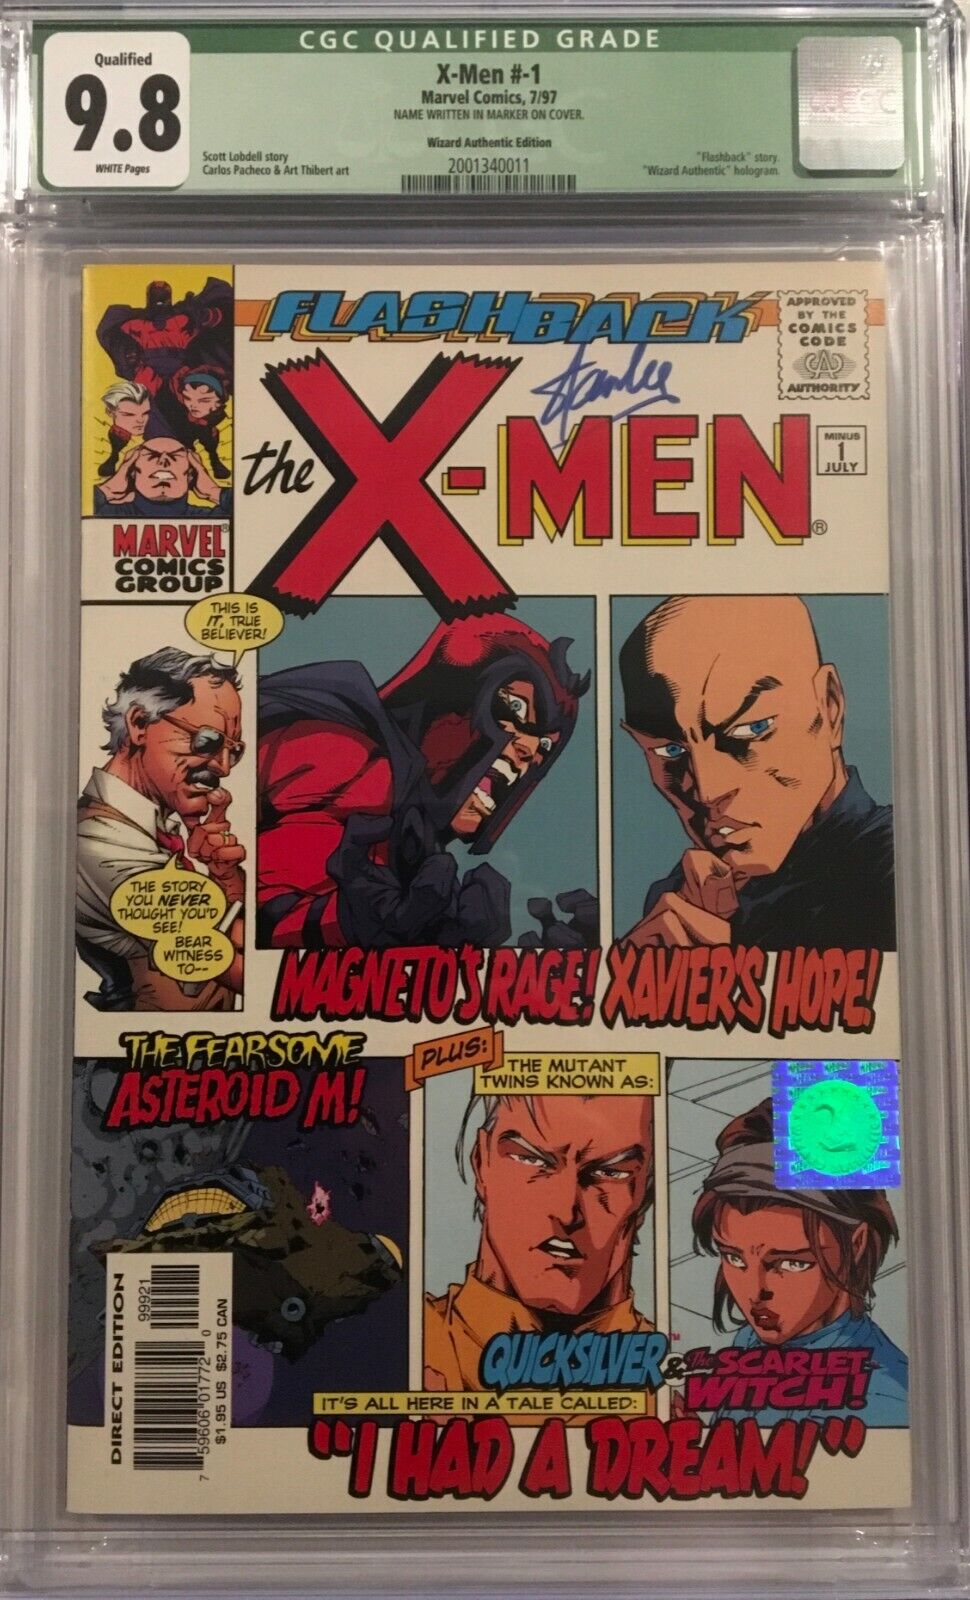 X-Men # -1 - CGC QL 9.8 - Signed by Stan Lee w/COA